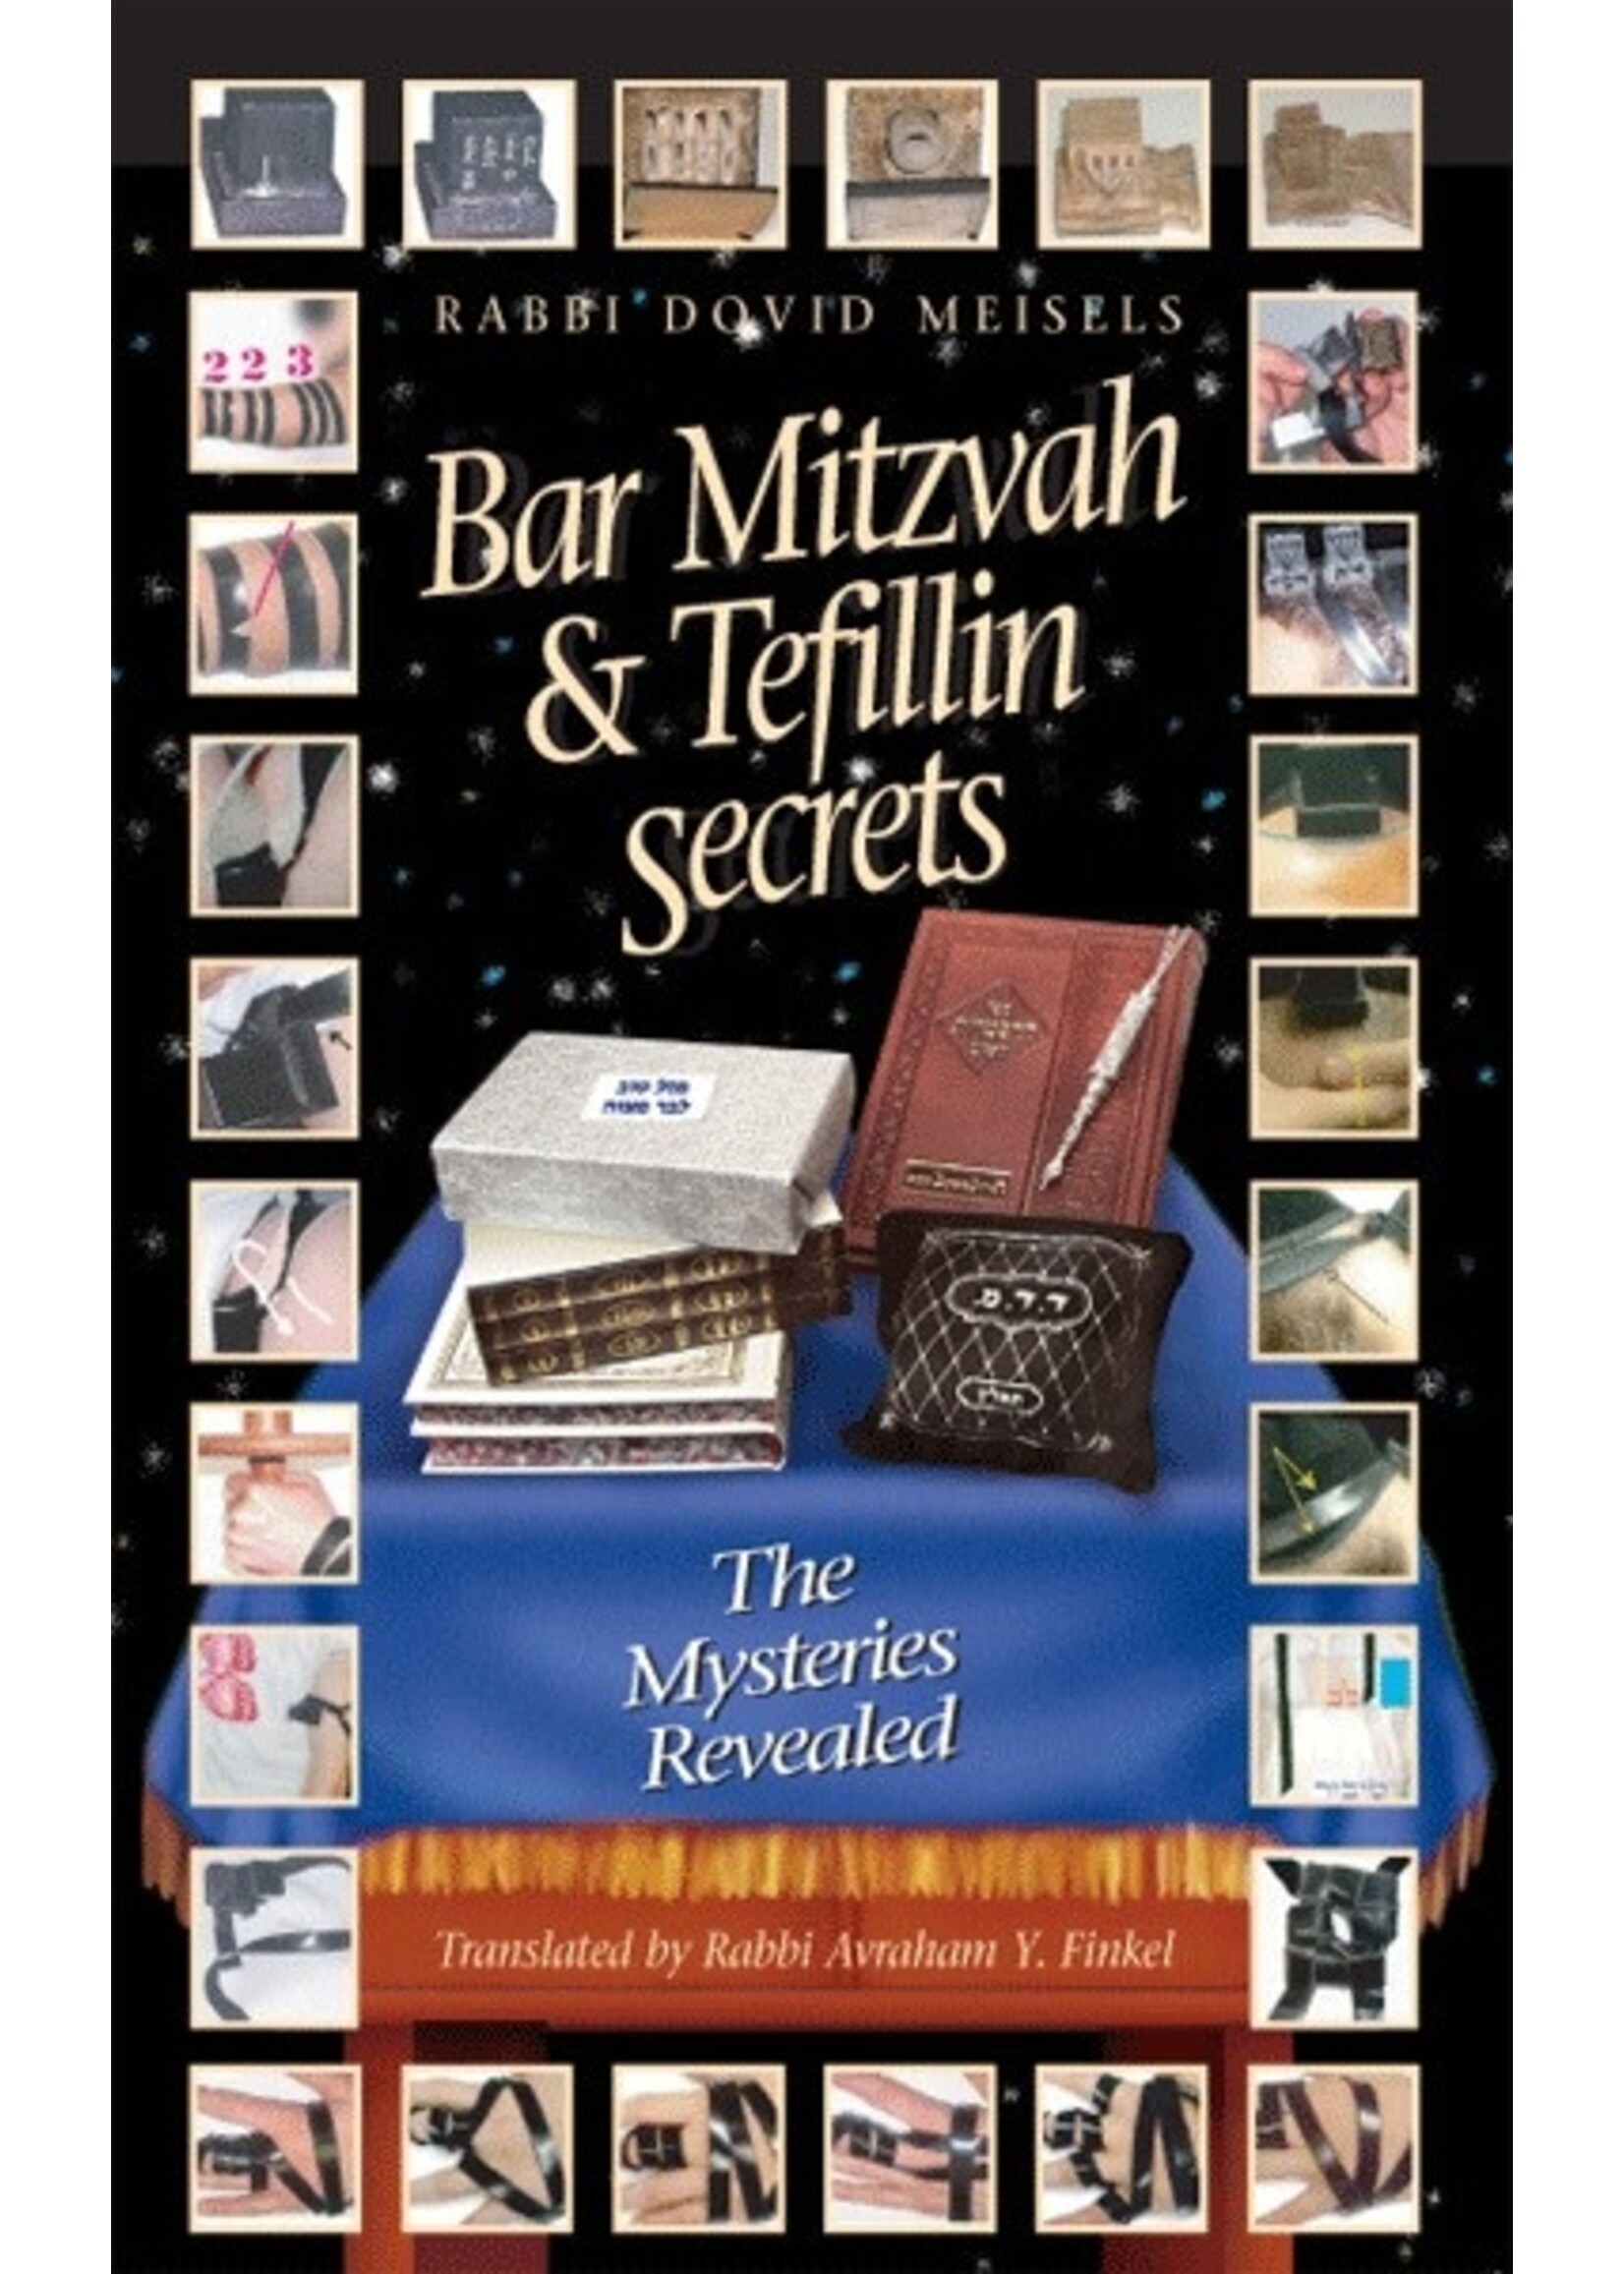 BAR MITZVAH & TEFILLIN SECRETS